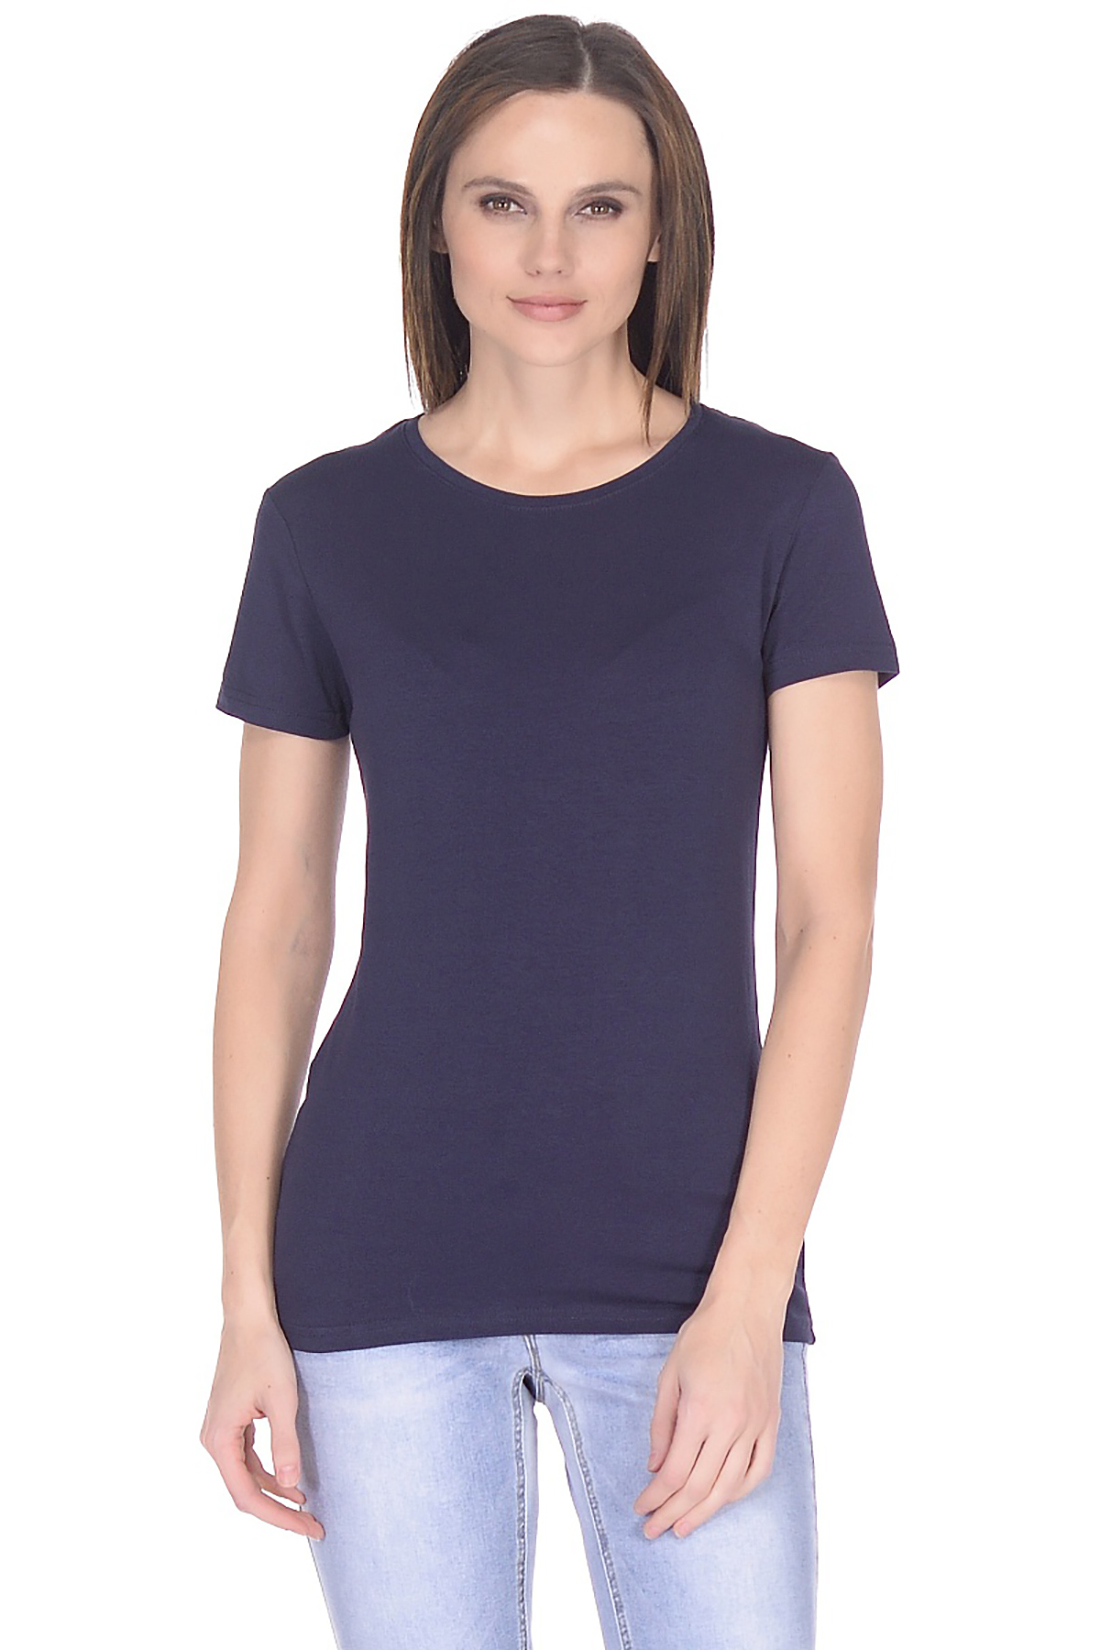 Базовая футболка (арт. baon B238201), размер L, цвет синий Базовая футболка (арт. baon B238201) - фото 1